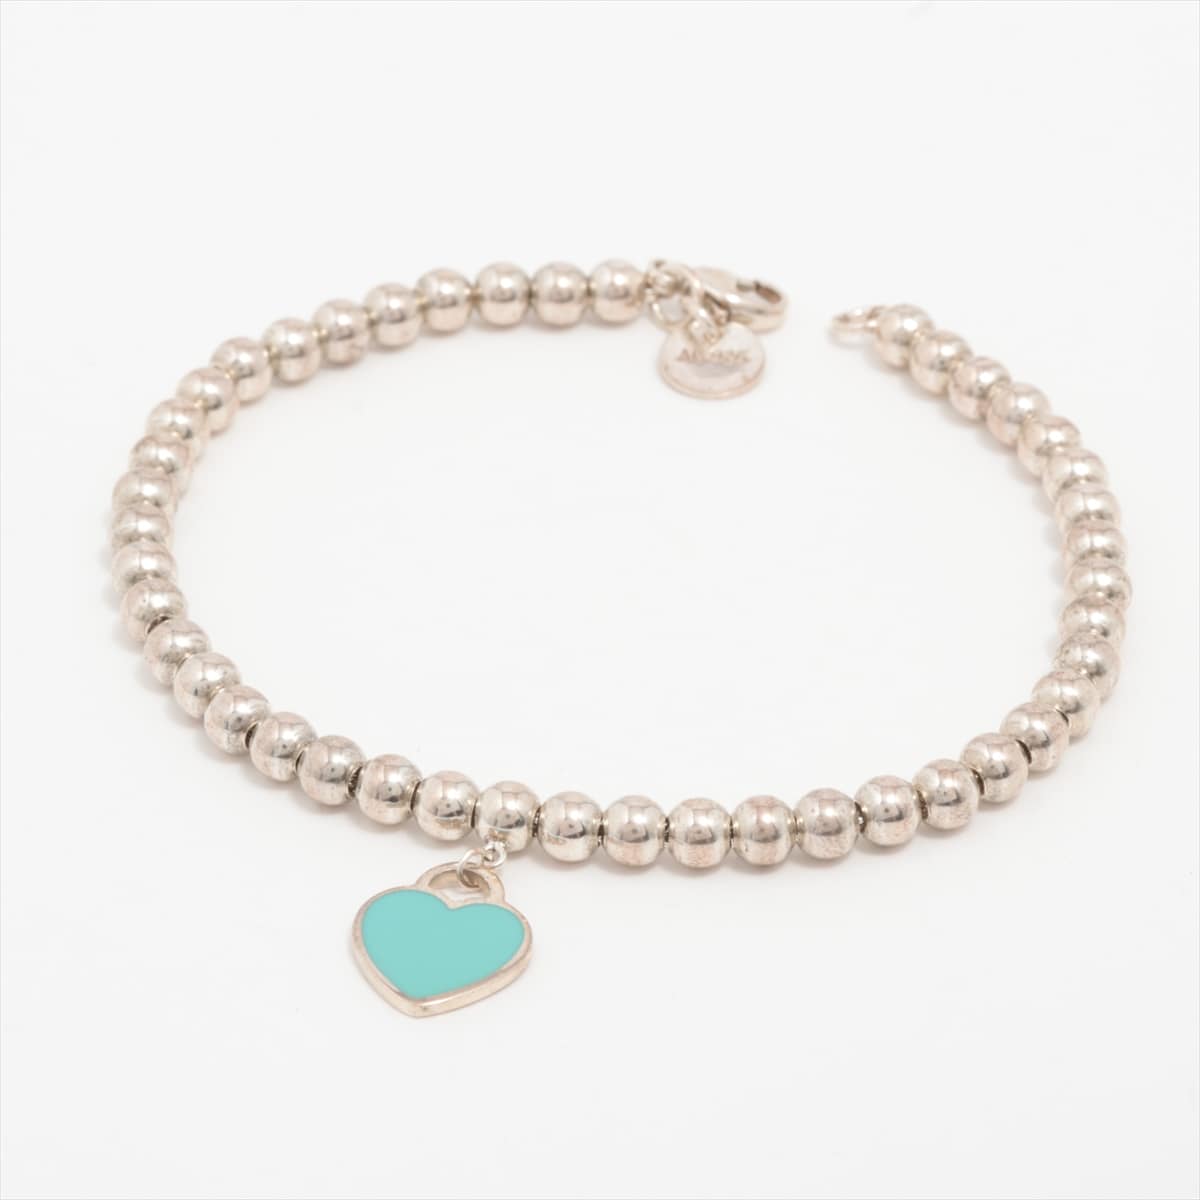 Tiffany return Toe Tiffany Mini heart tag Bracelet 925 5.8g Silver